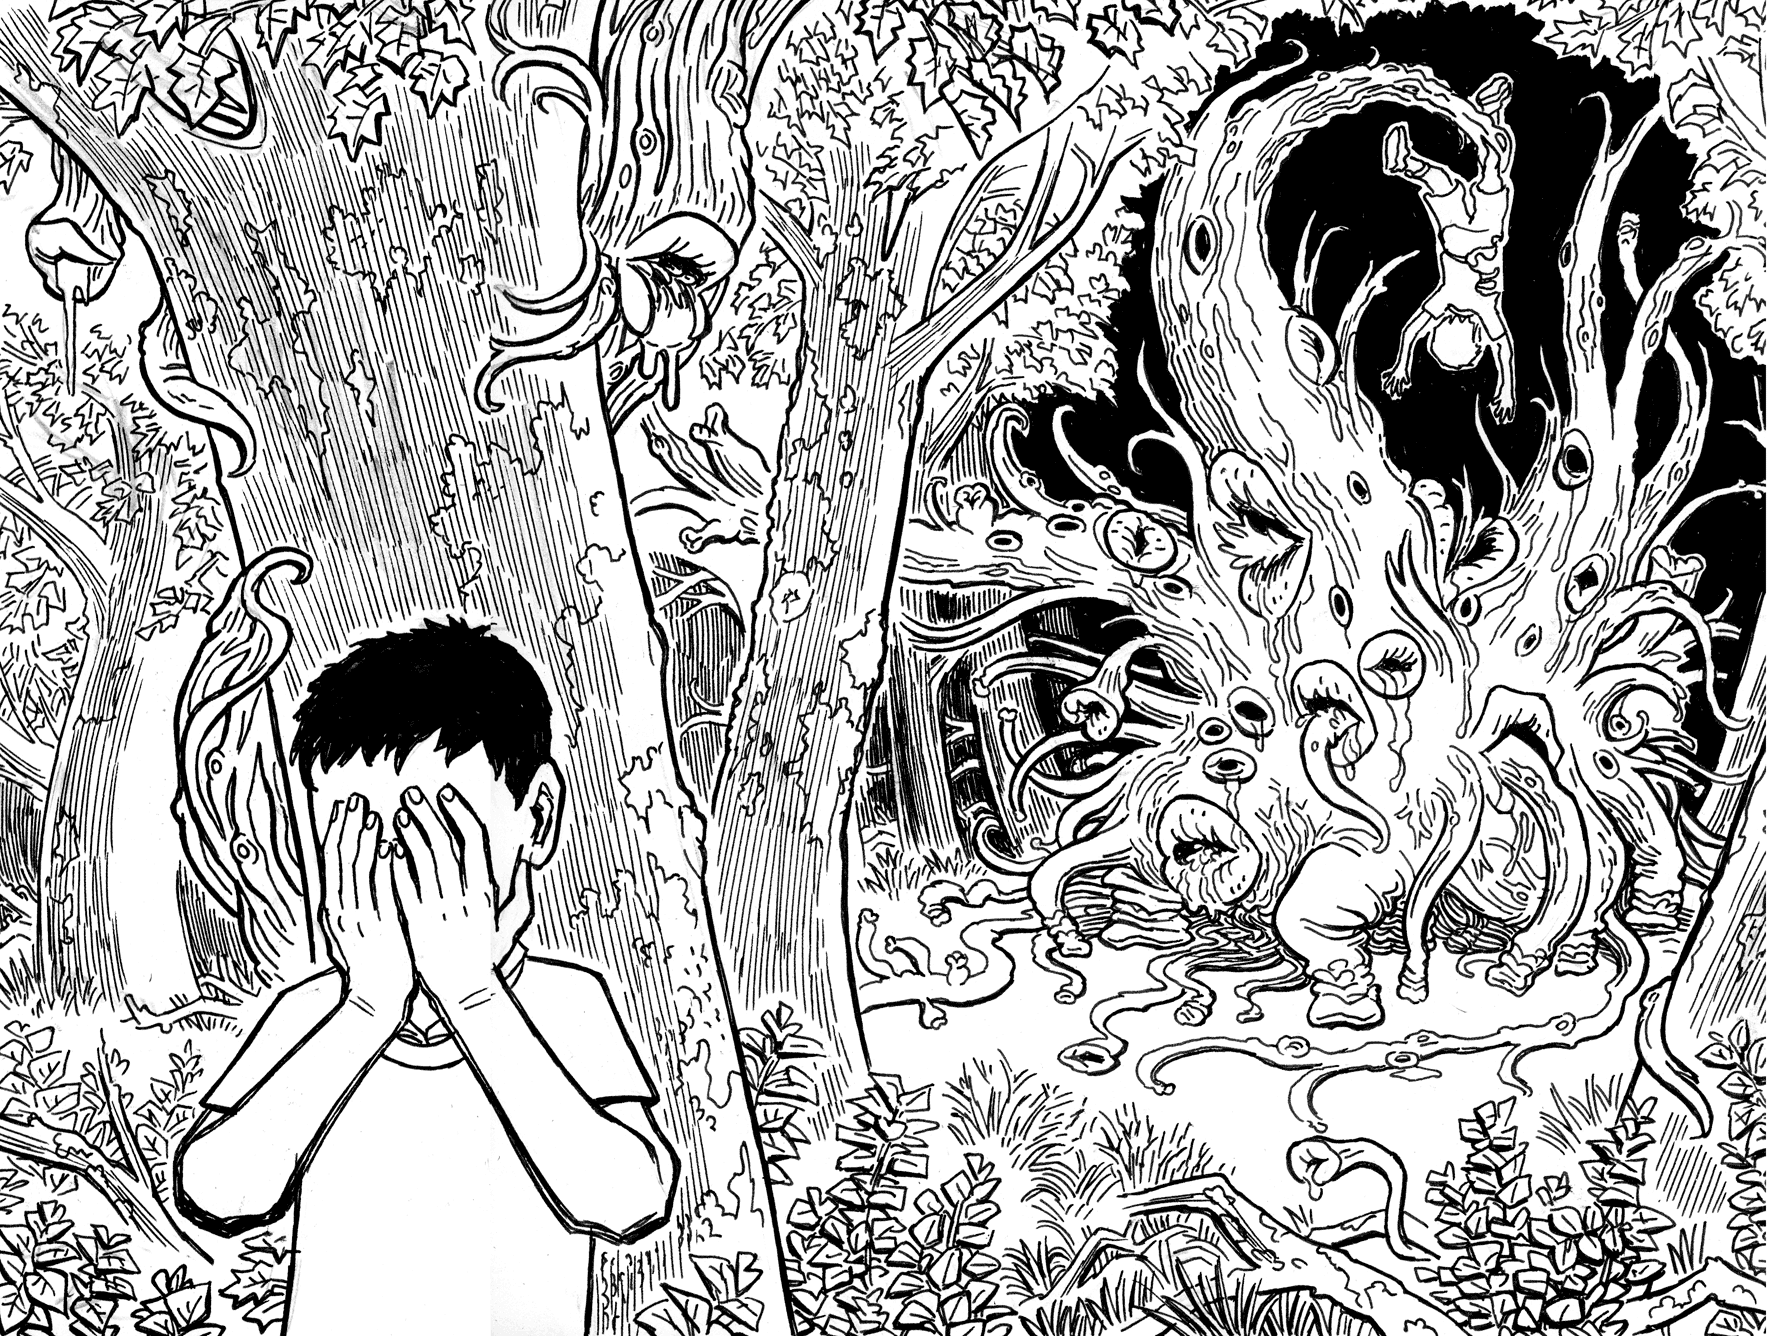 Lovecraft Sketch MWF: The Dark Young of Shub-Niggurath | Mock Man Press